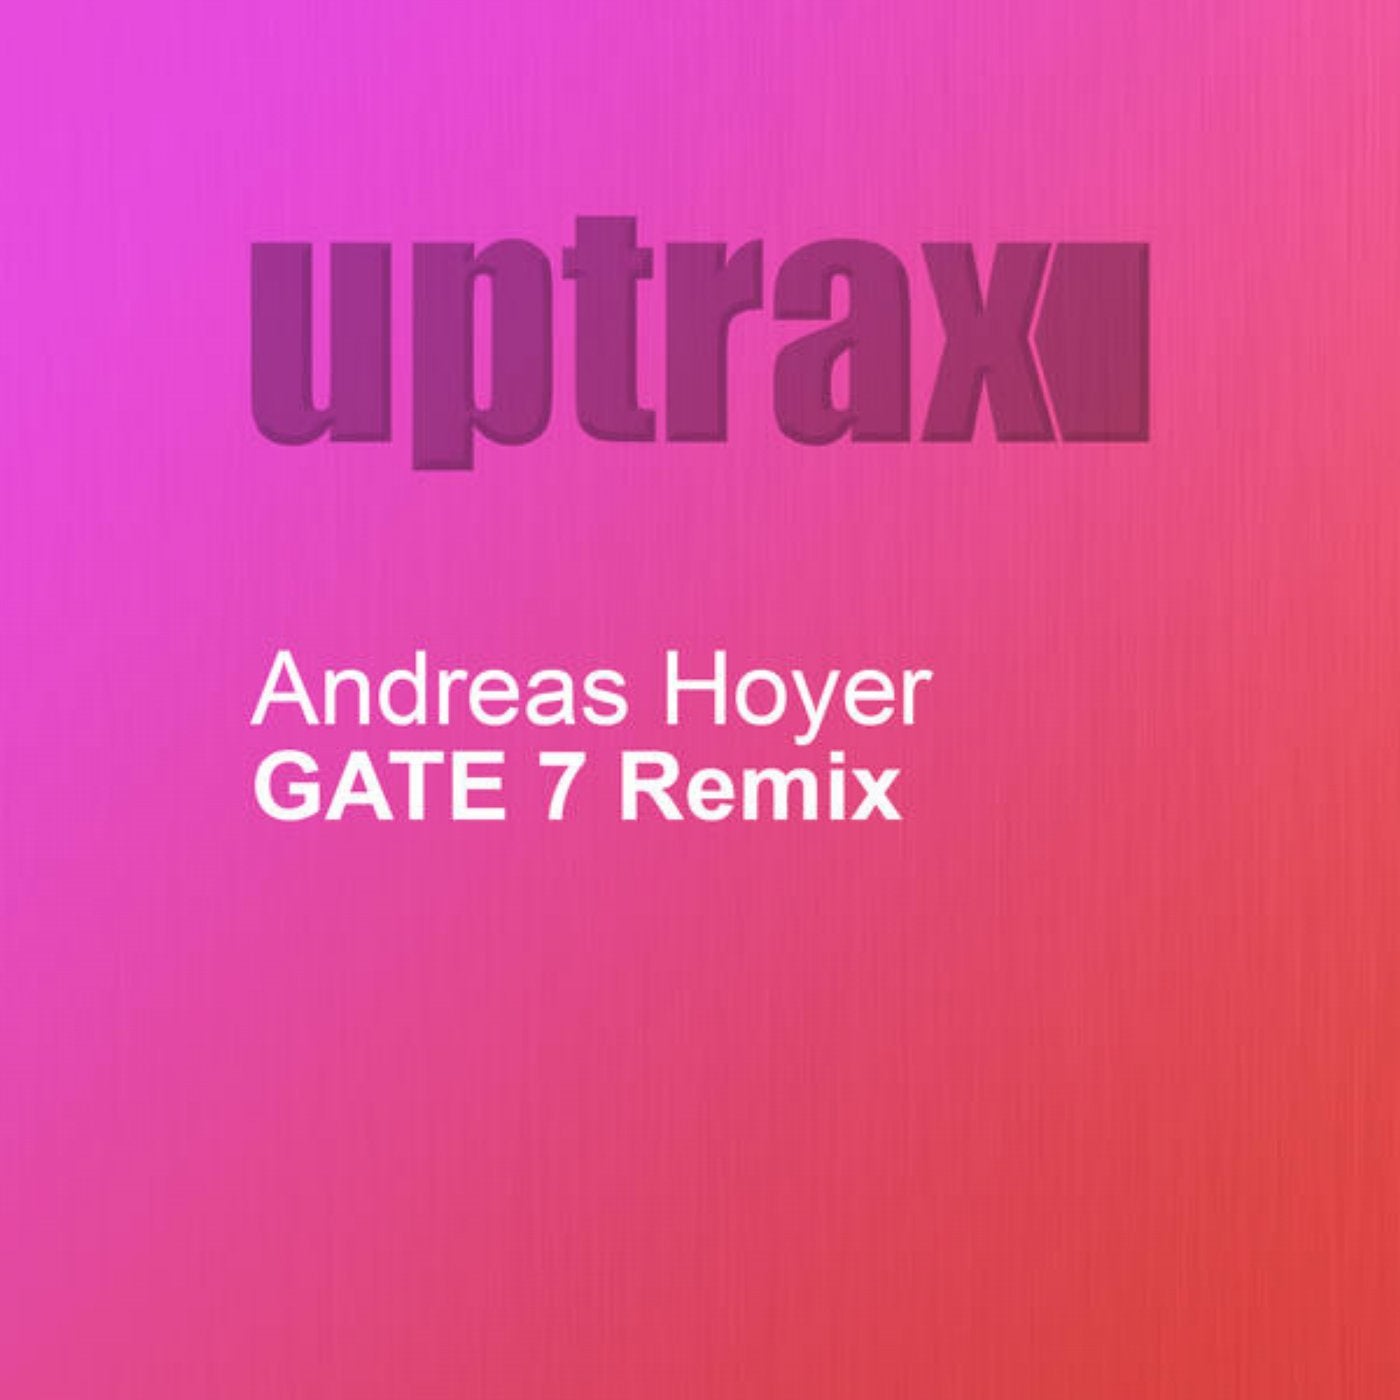 Gate 7 Remix